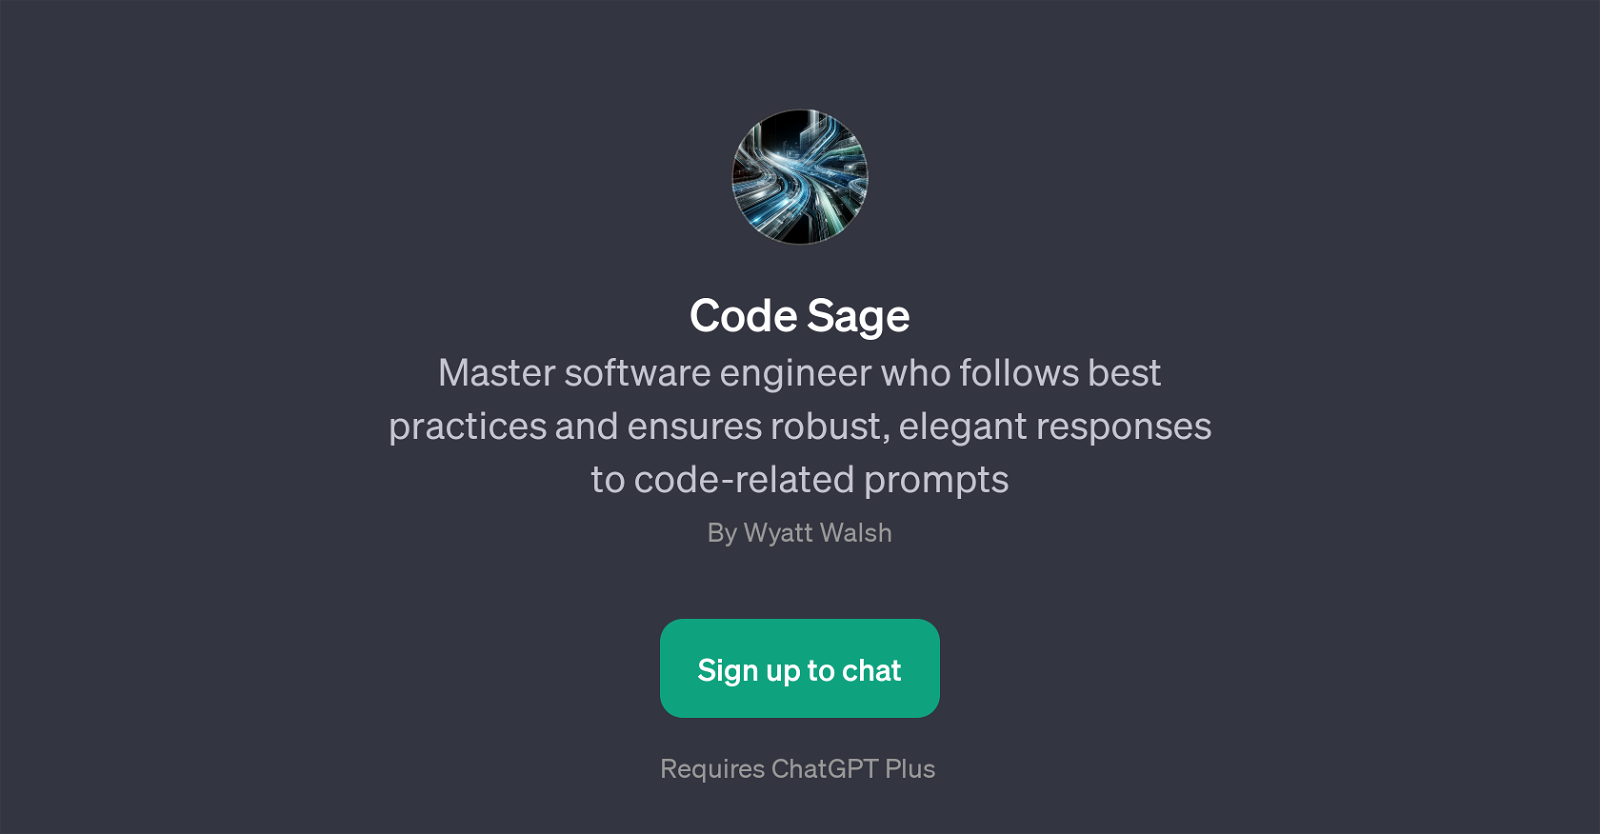 Code Sage website